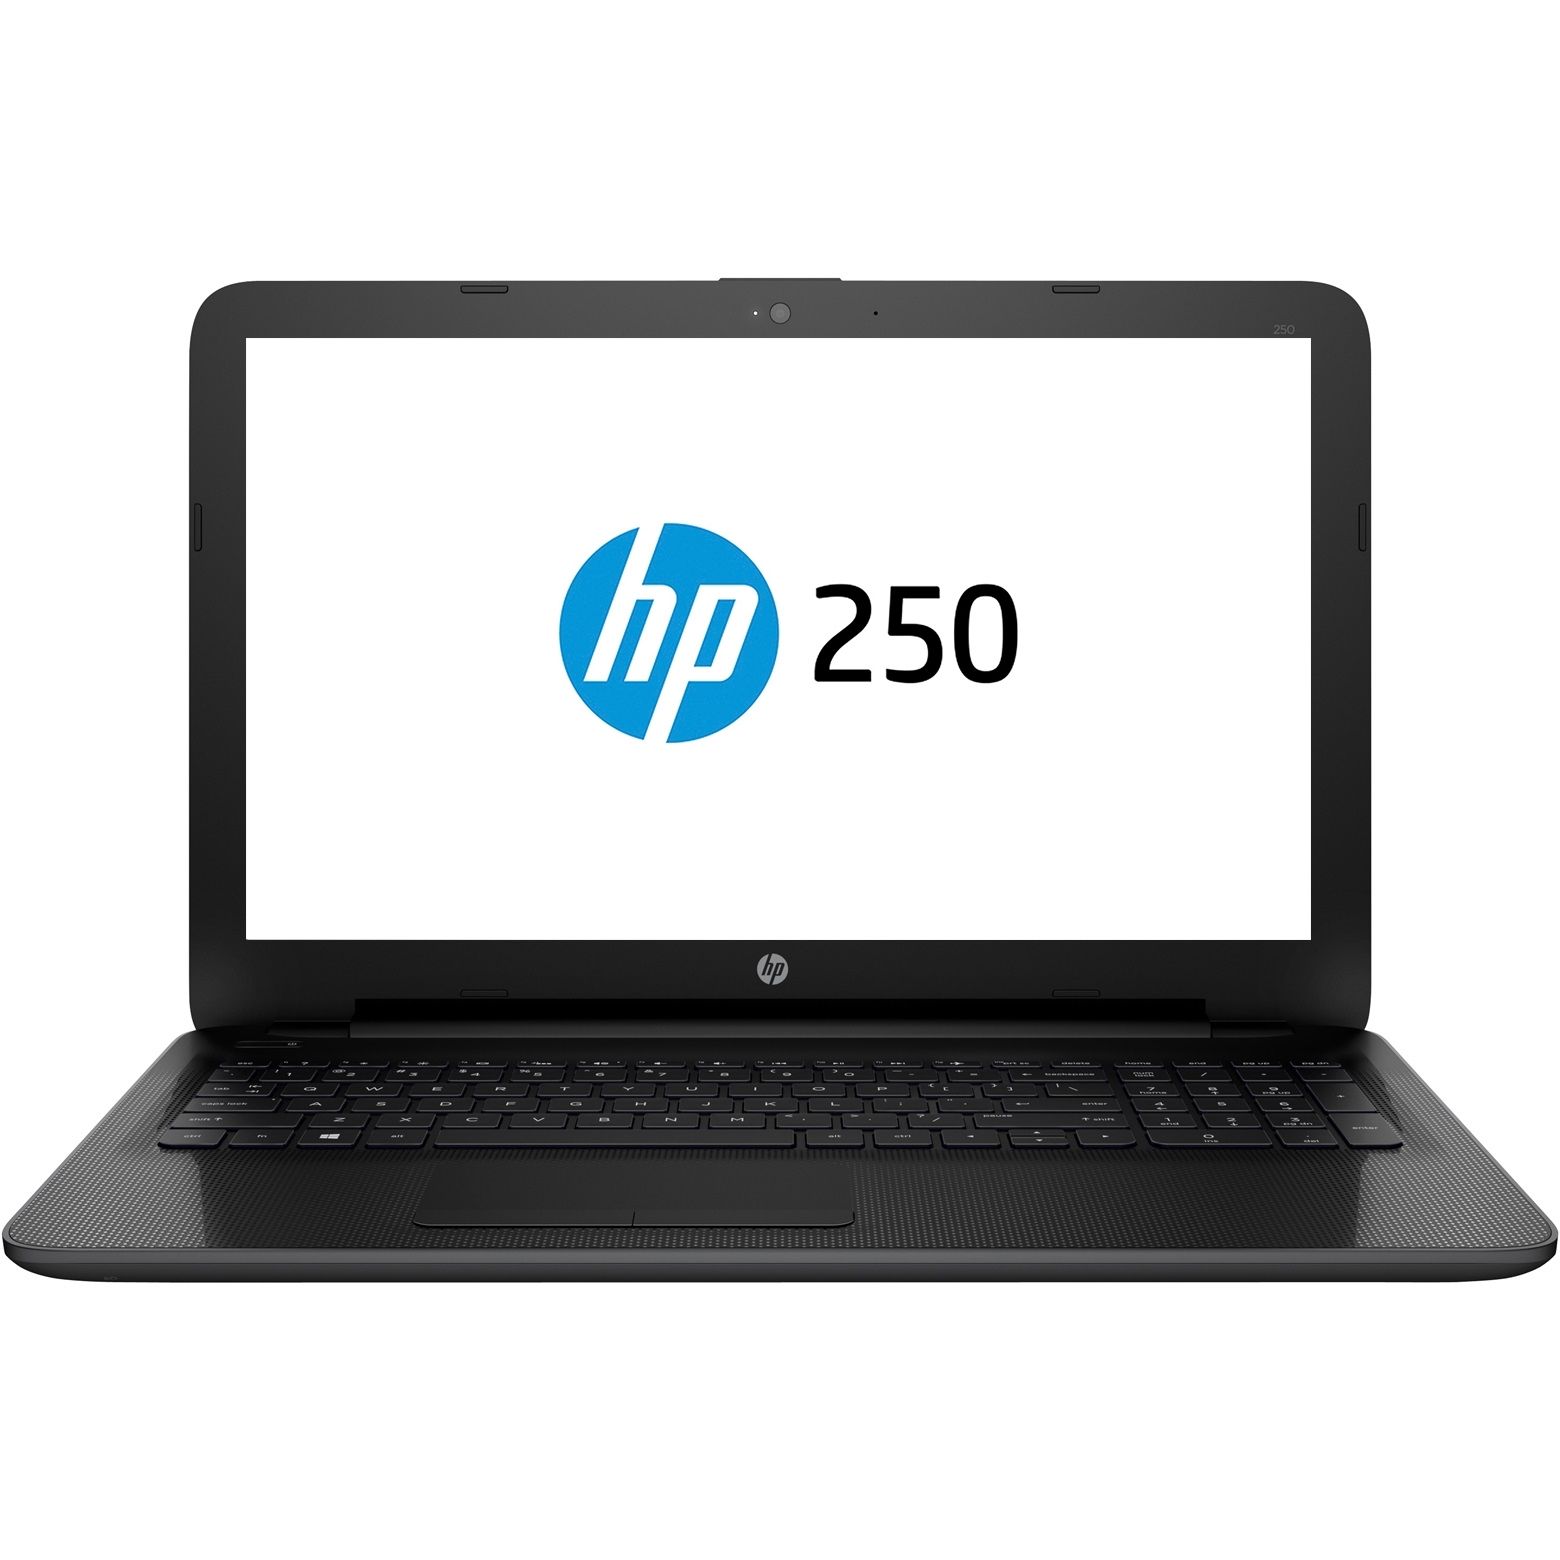  Laptop HP 250 G4, Intel Core i3-5005U, 4GB DDR3, HDD 1TB, Intel HD Graphics, Free DOS 